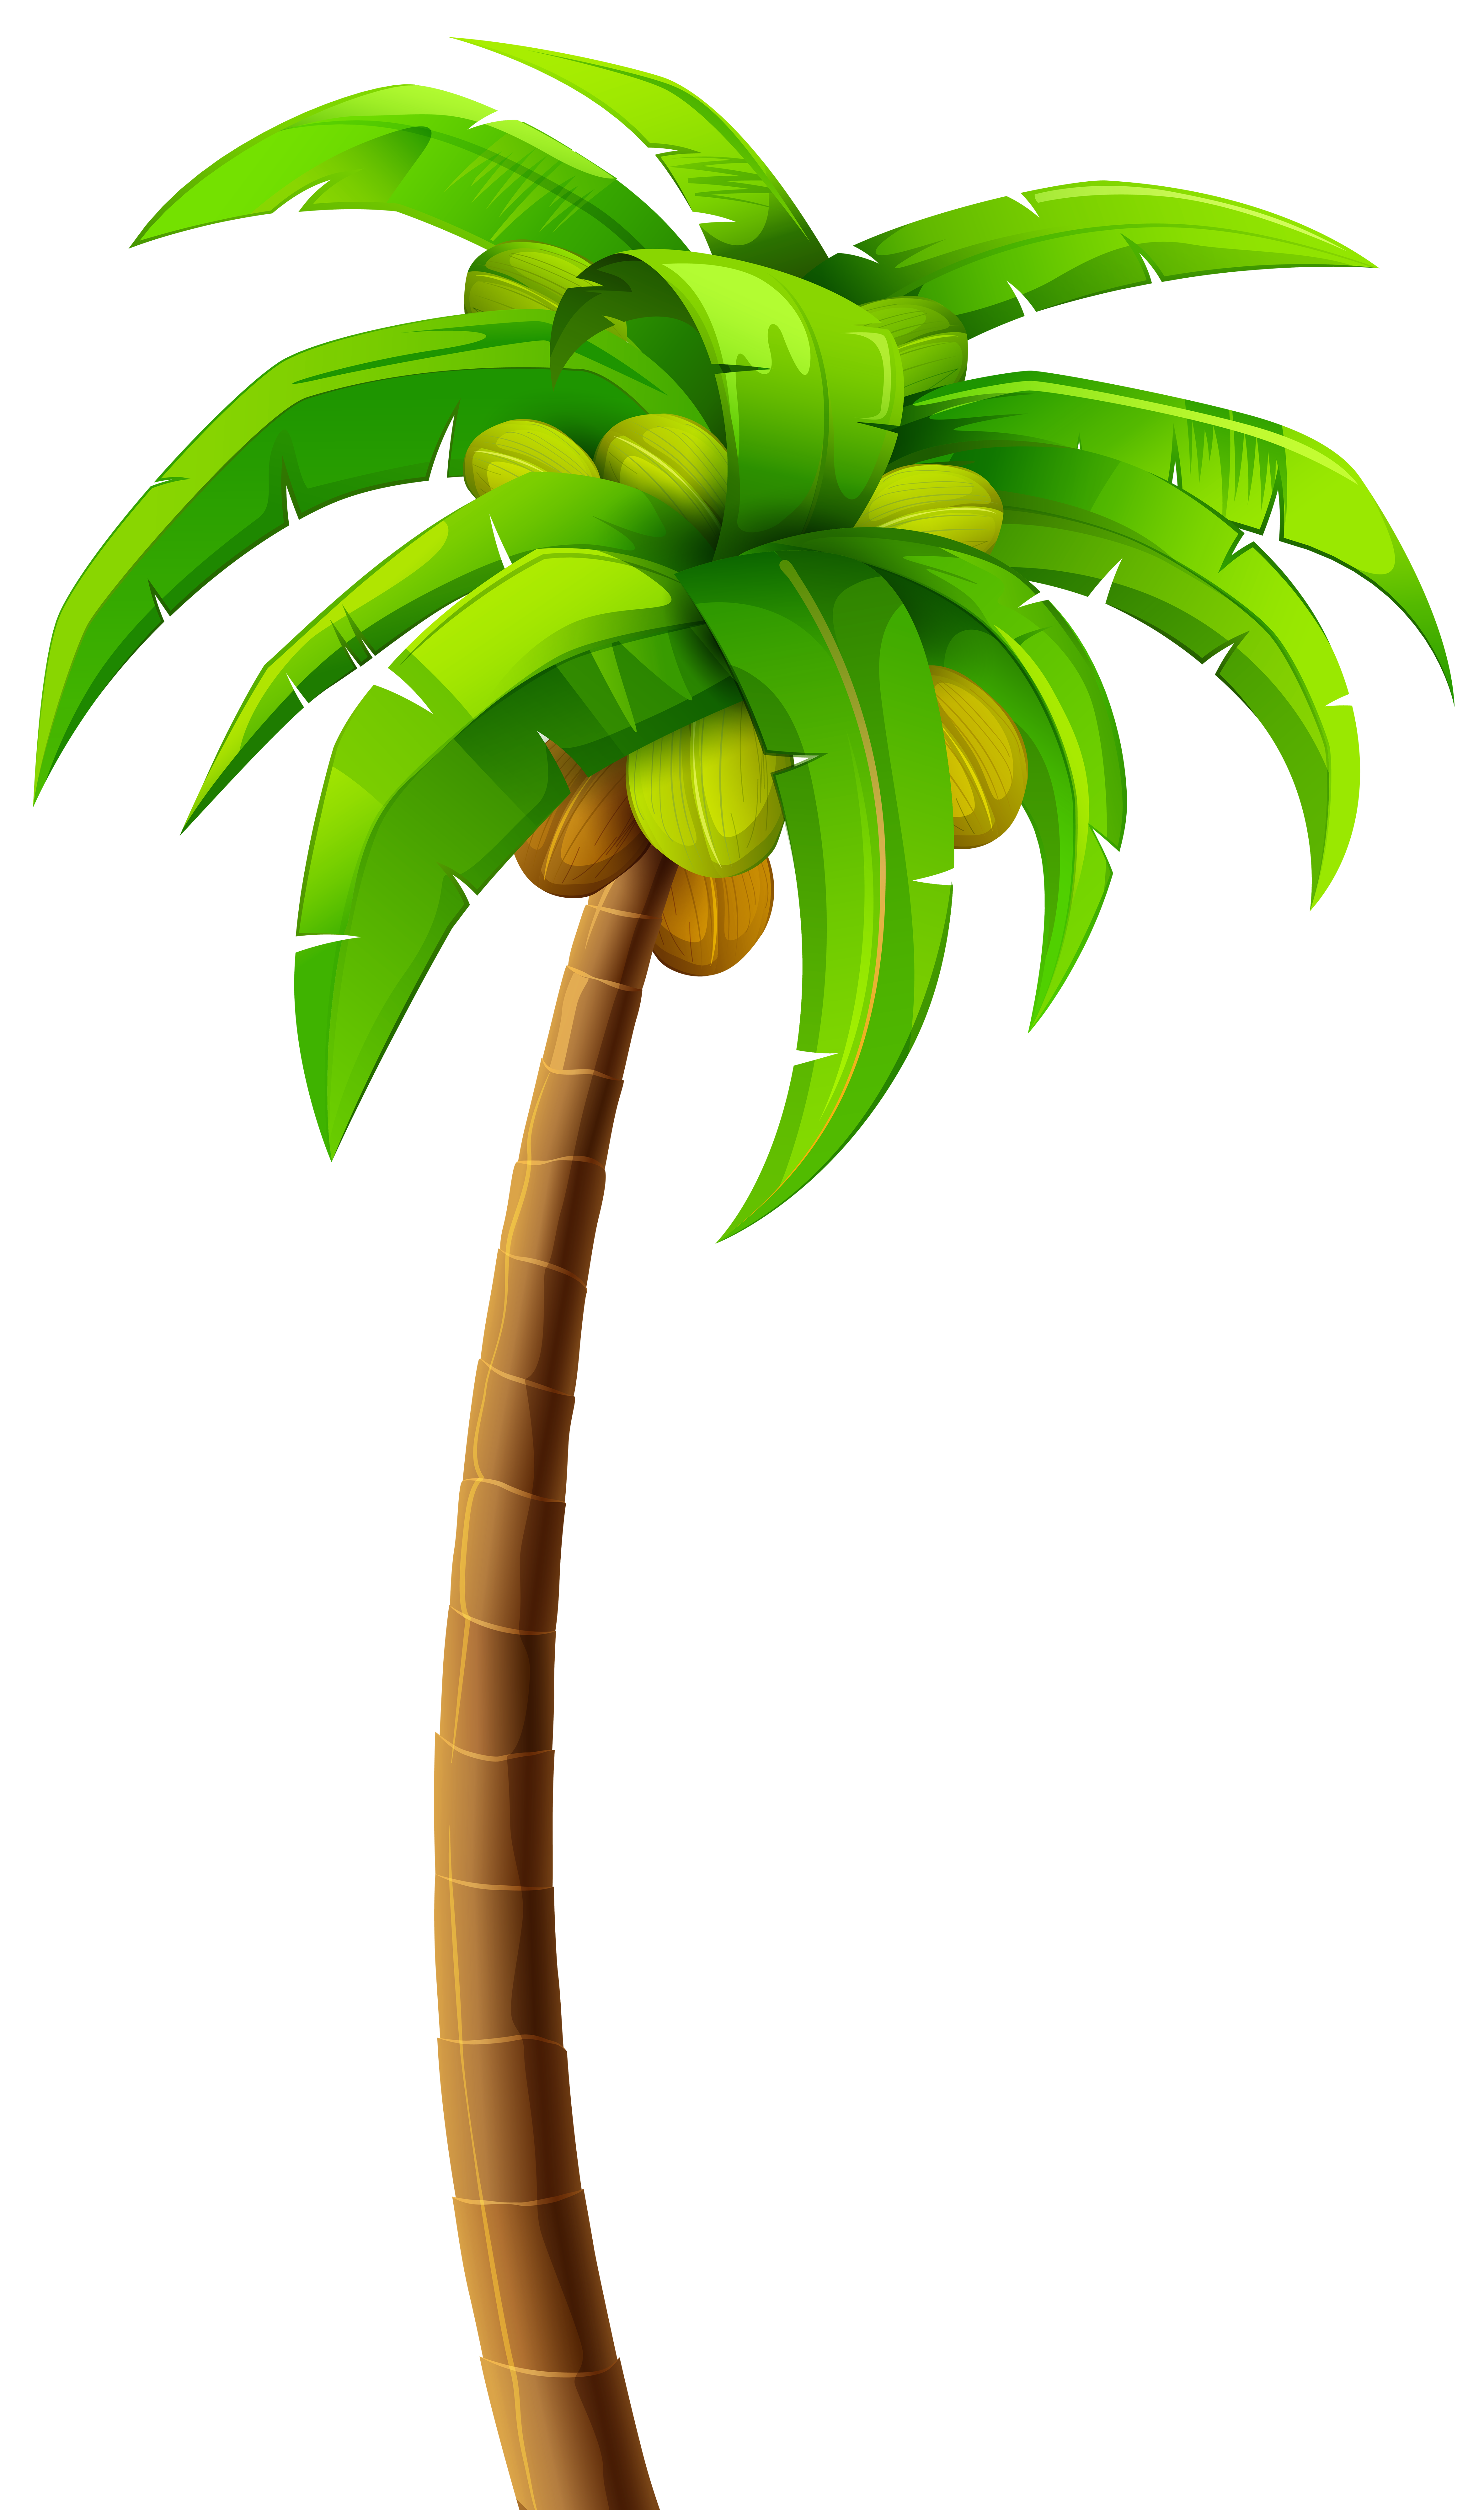 palm tree clip art background